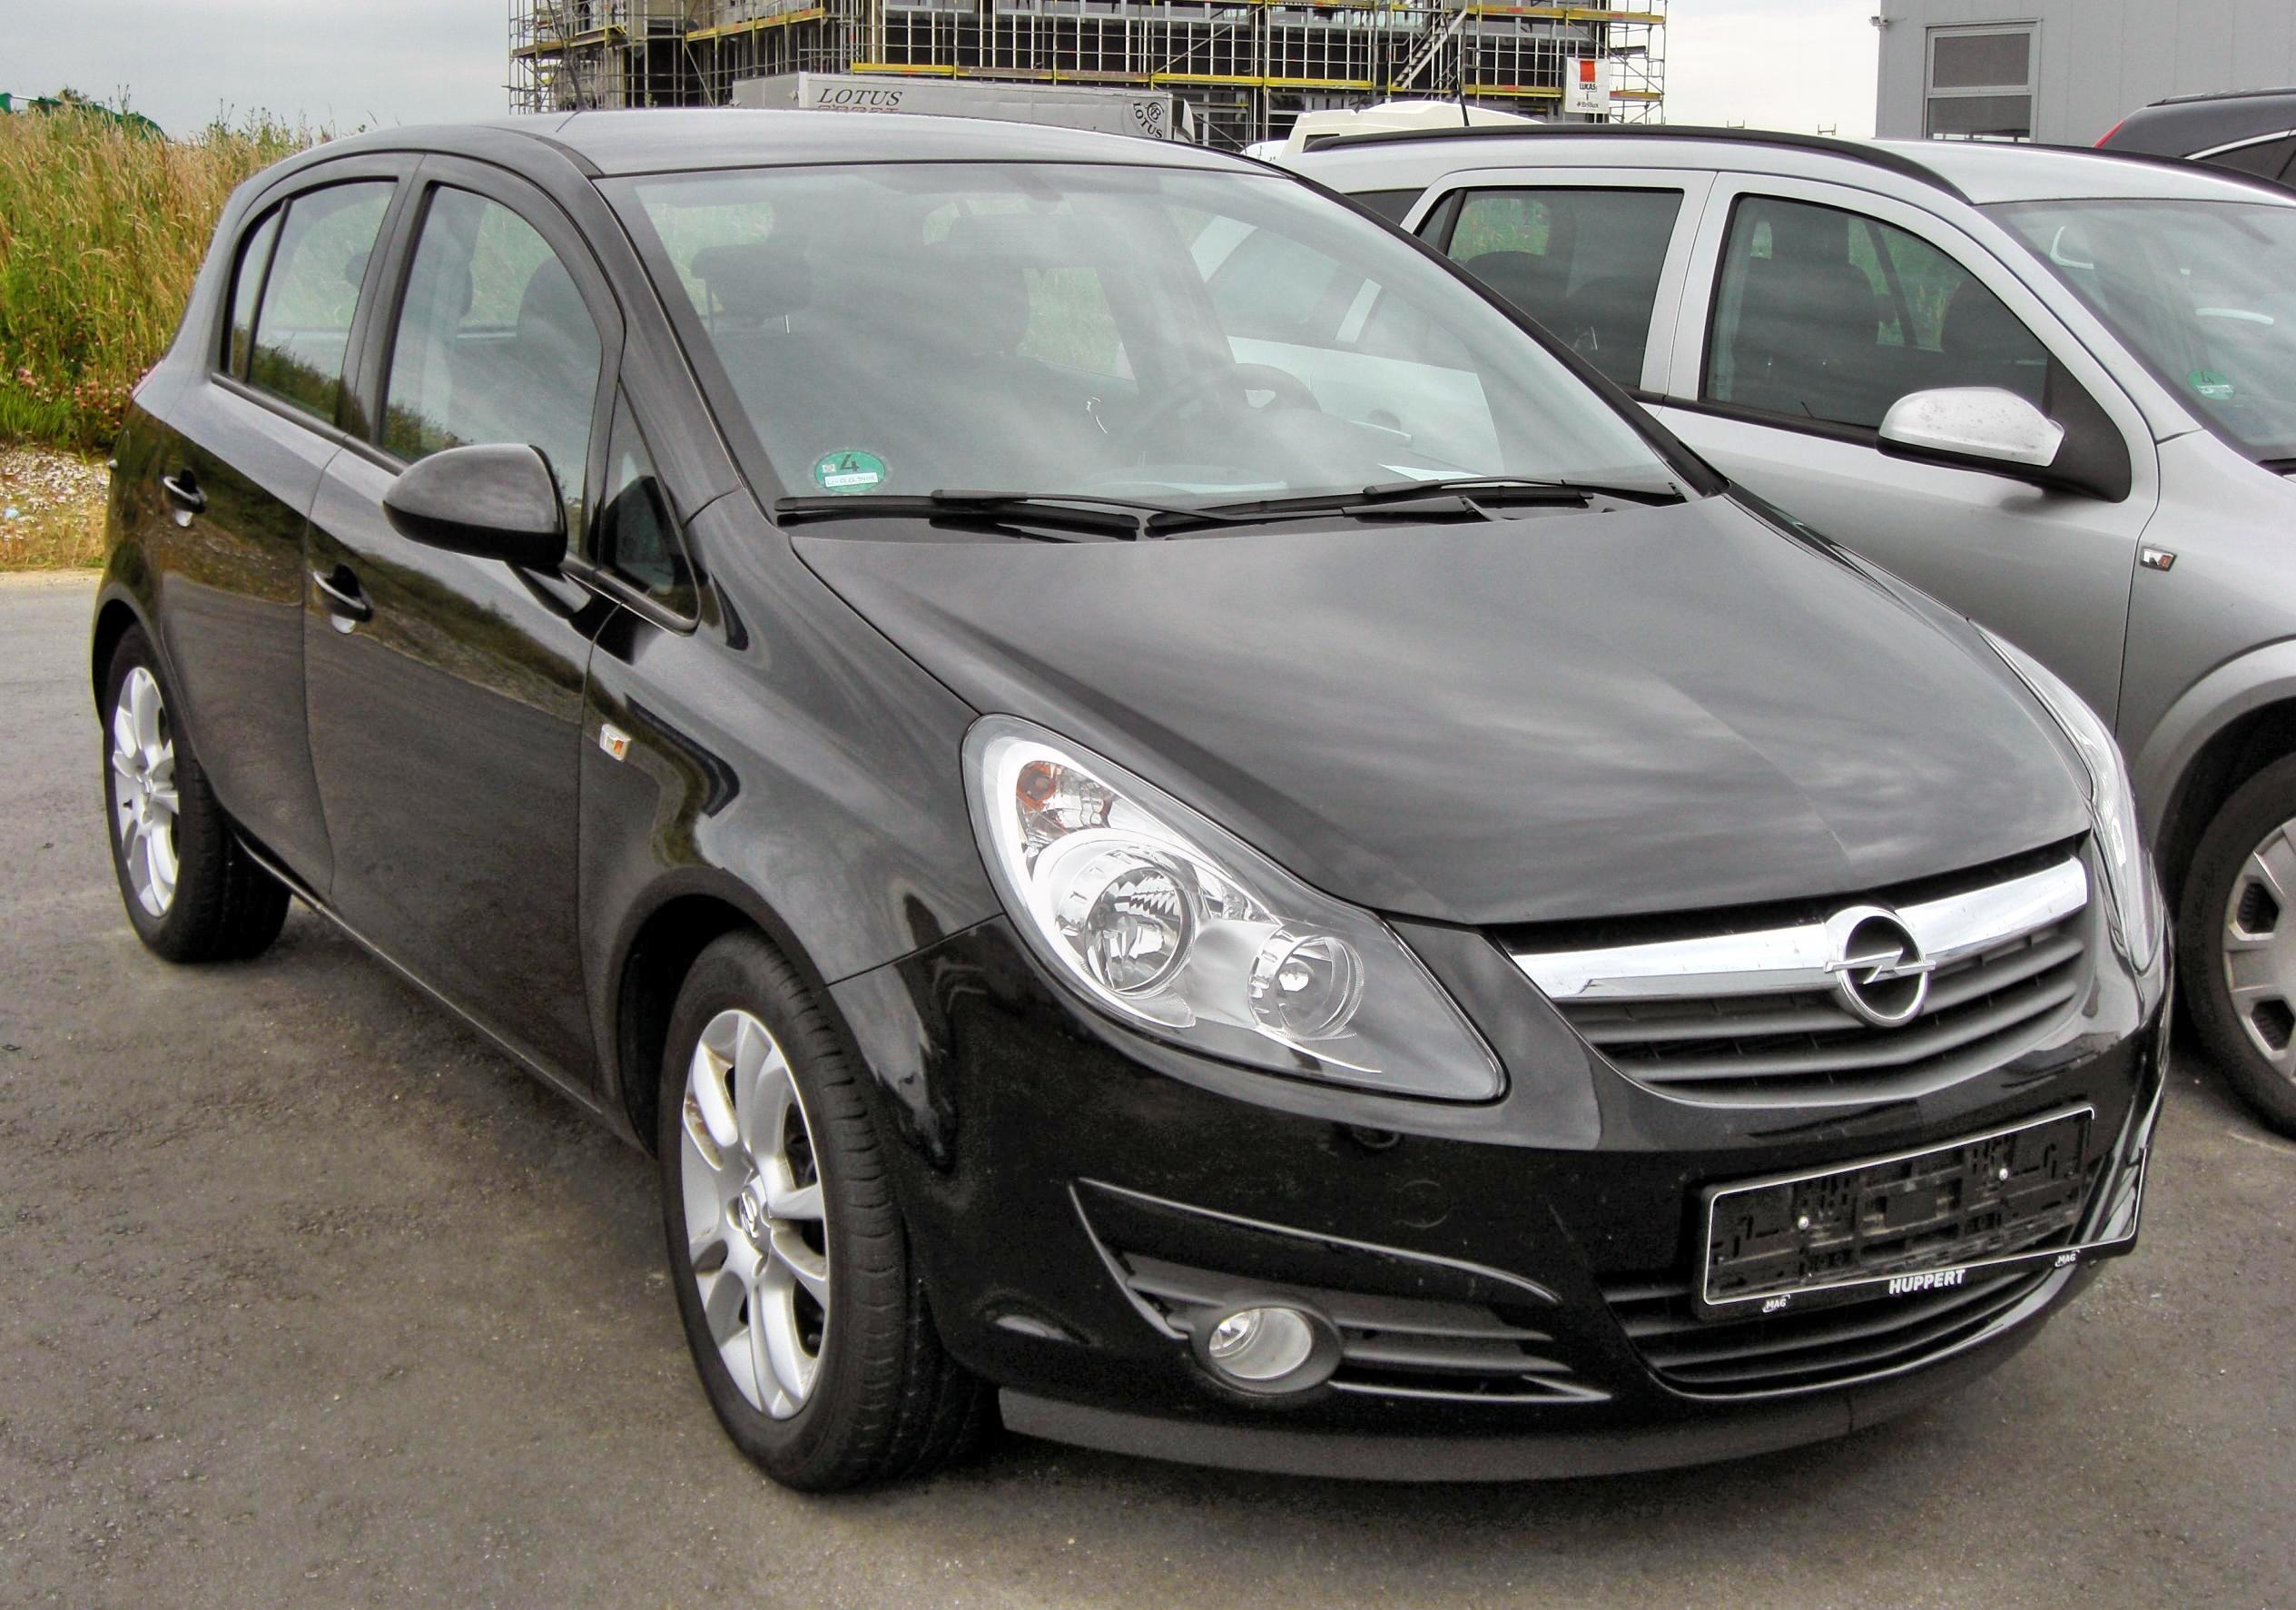 File:Opel Corsa D 1.2 20090620 front.JPG - Wikimedia Commons